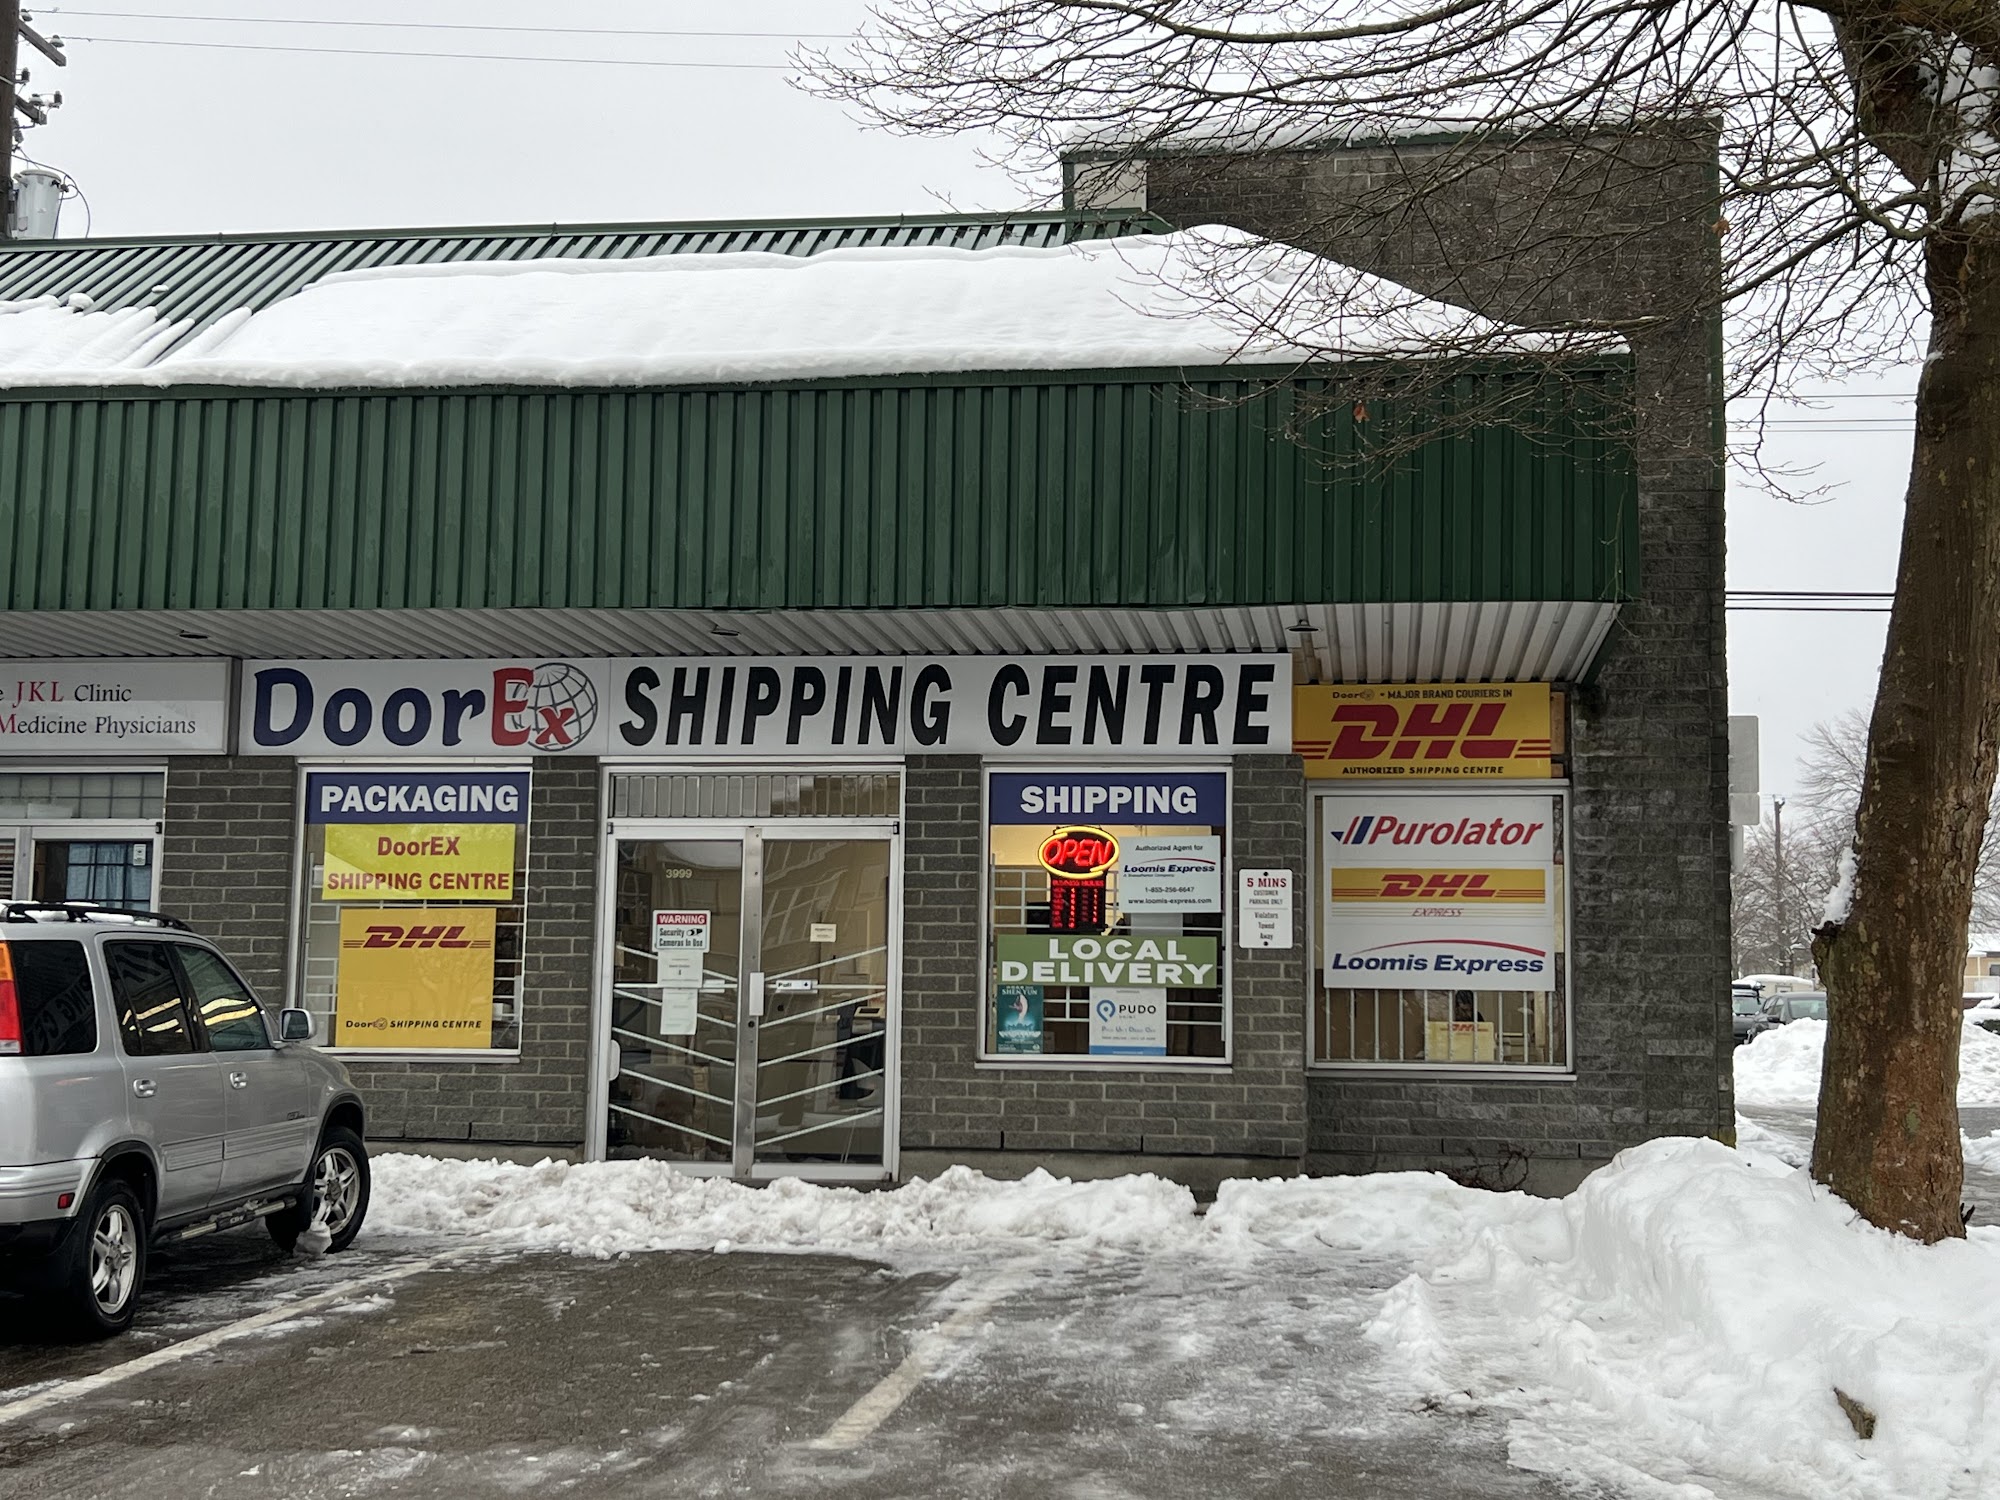 DoorEx Shipping Centre